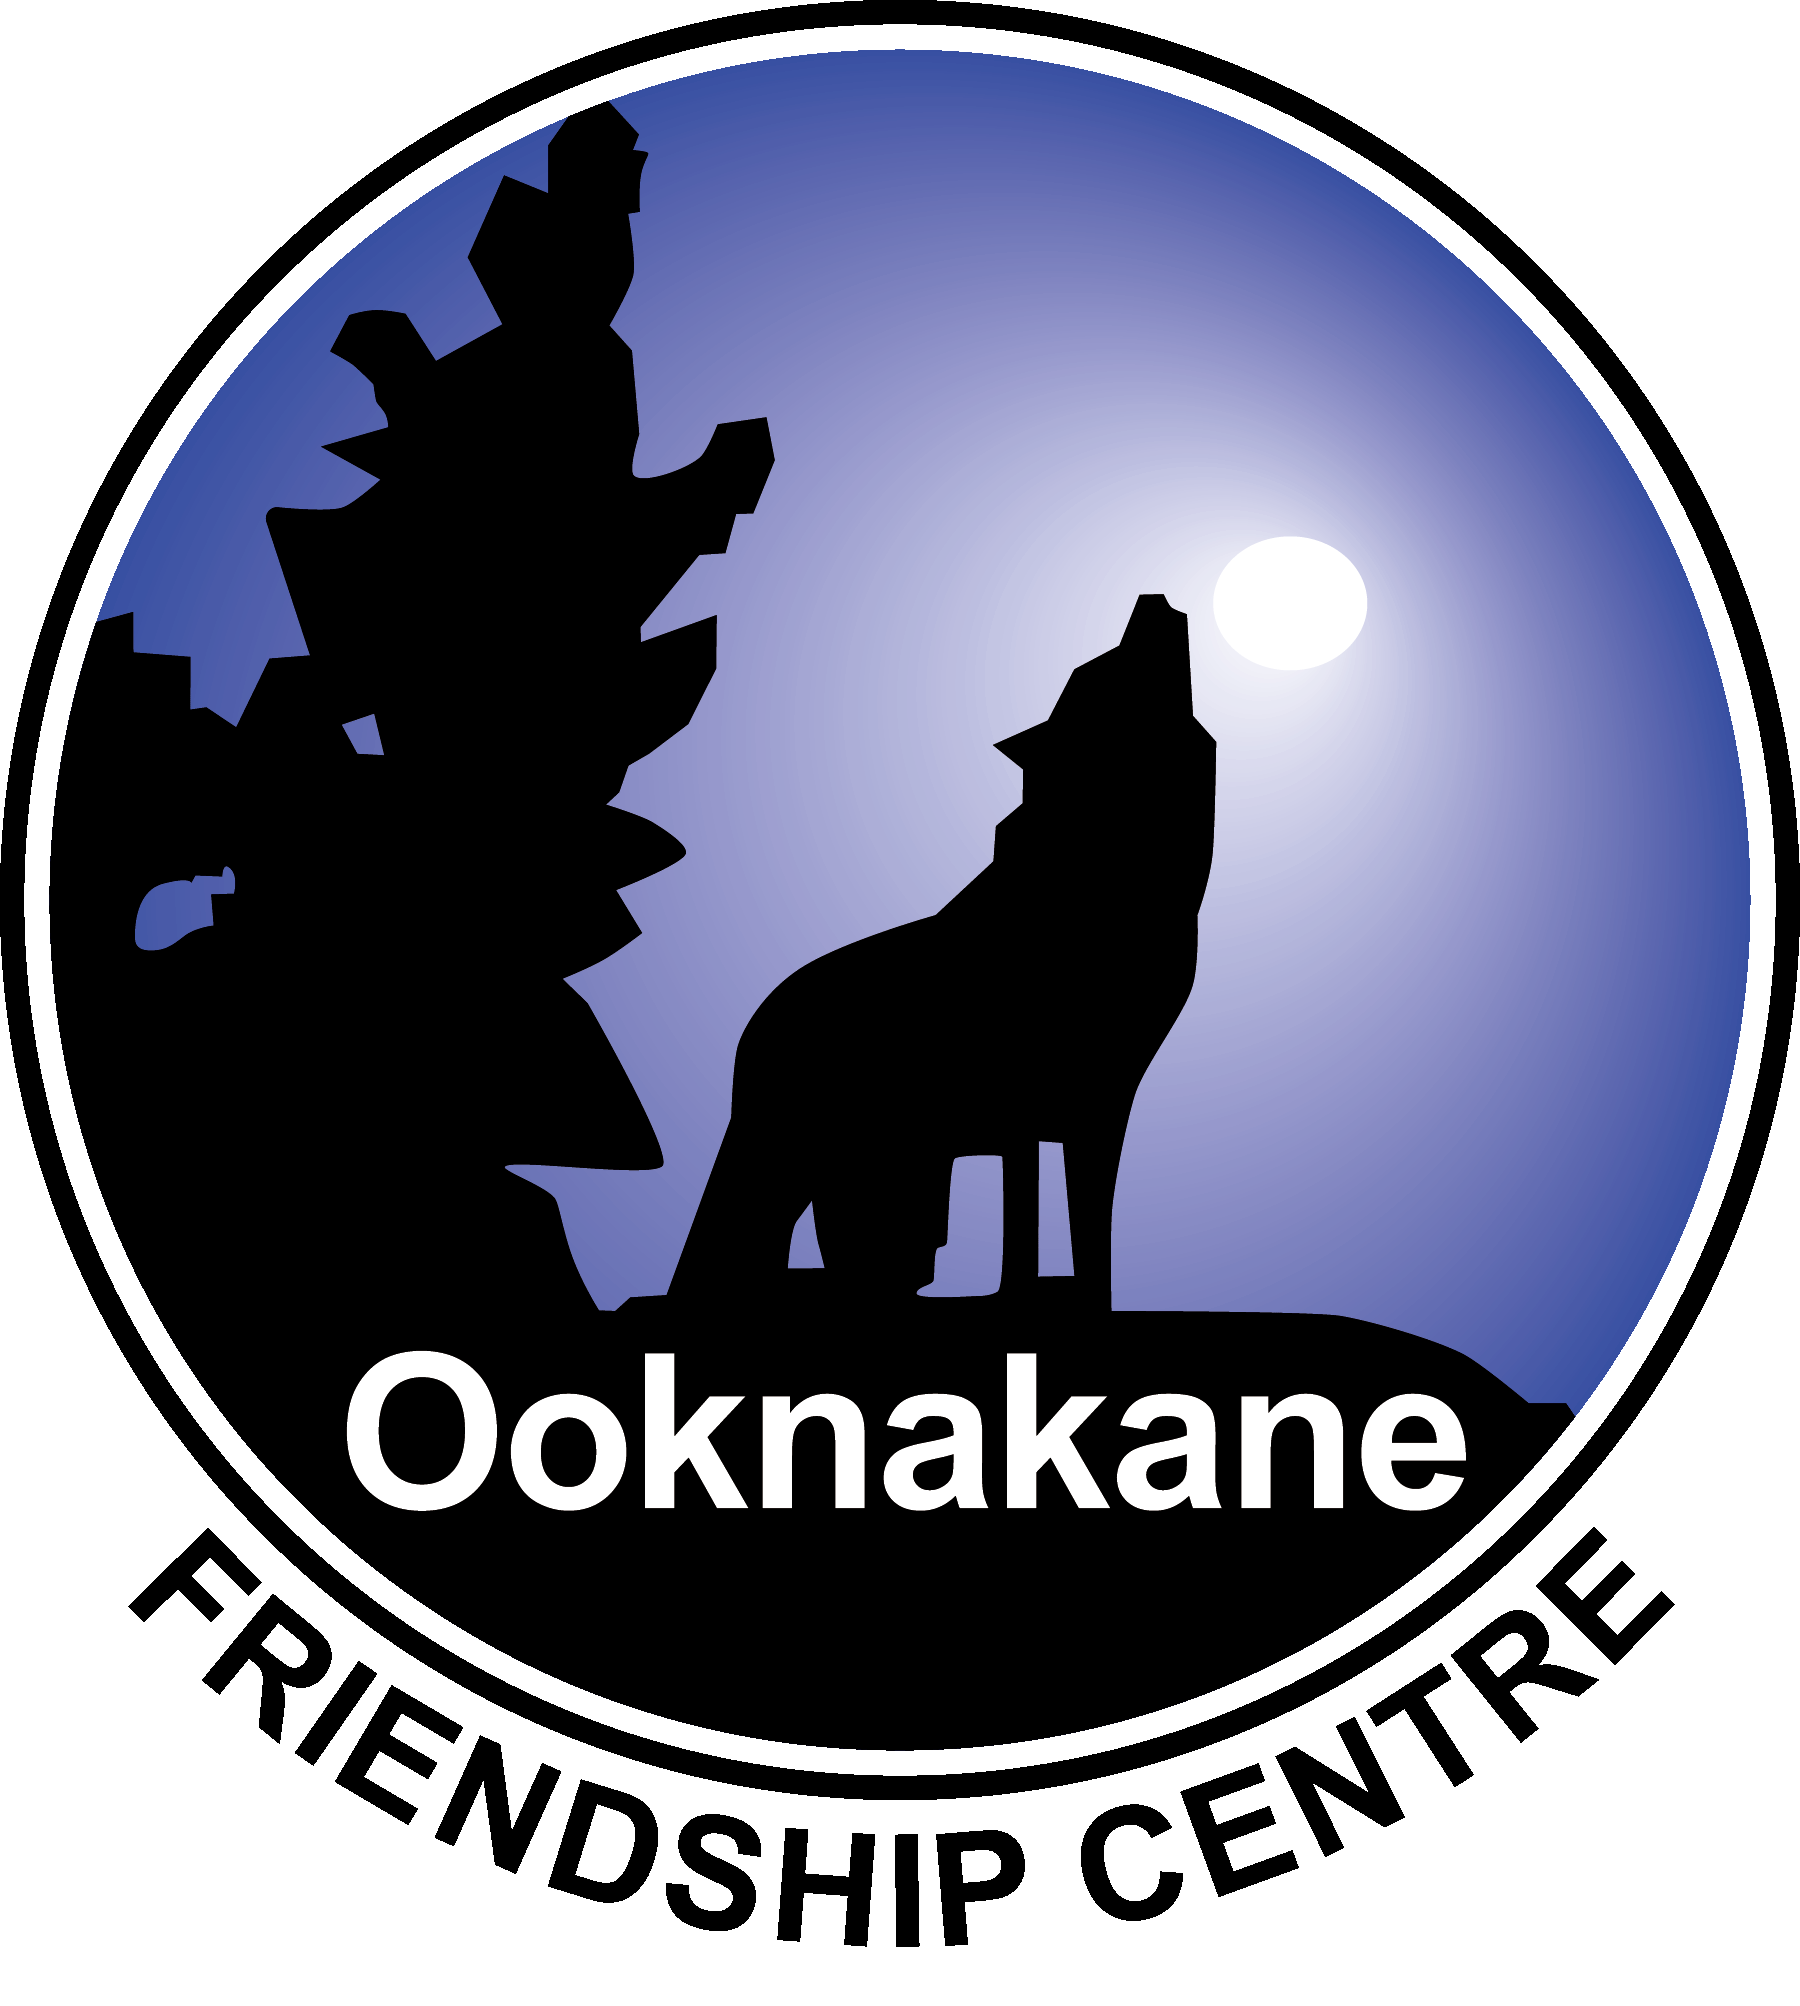 Ooknakane Friendship Centre